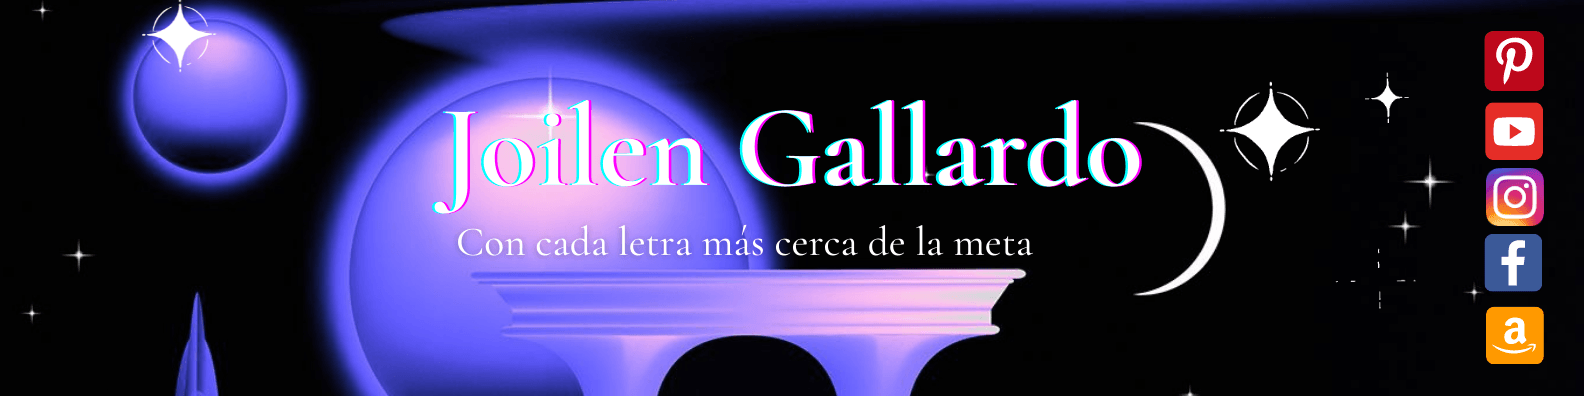 JoilenGallardo banner